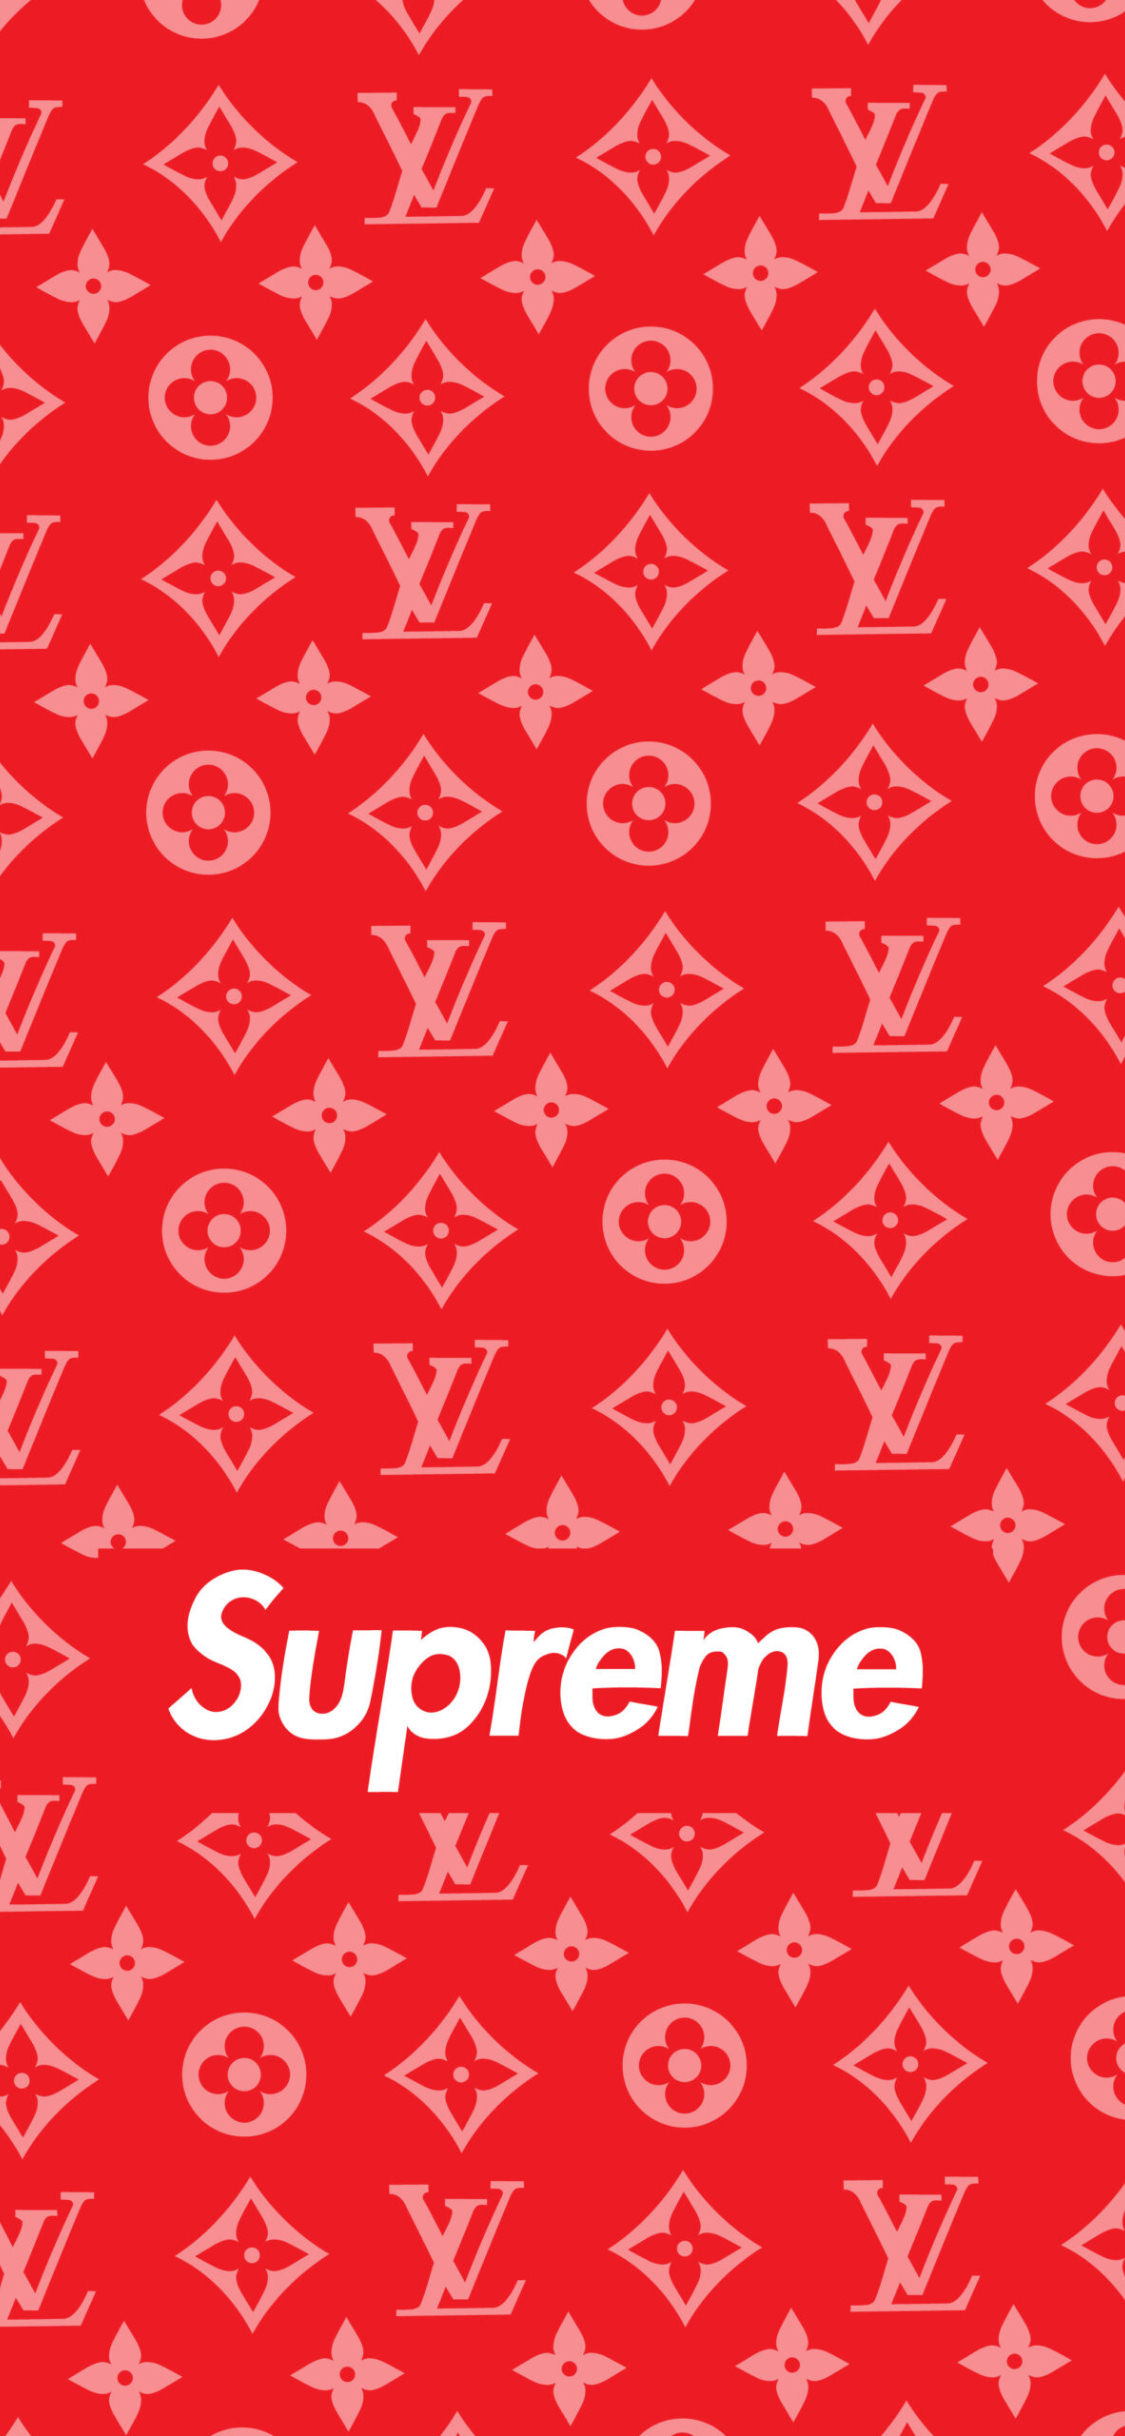 lvxsupreme01 - Louis Vuitton x Supremeの無料高画質スマホ壁紙2枚 [iPhone＆Androidに対応]